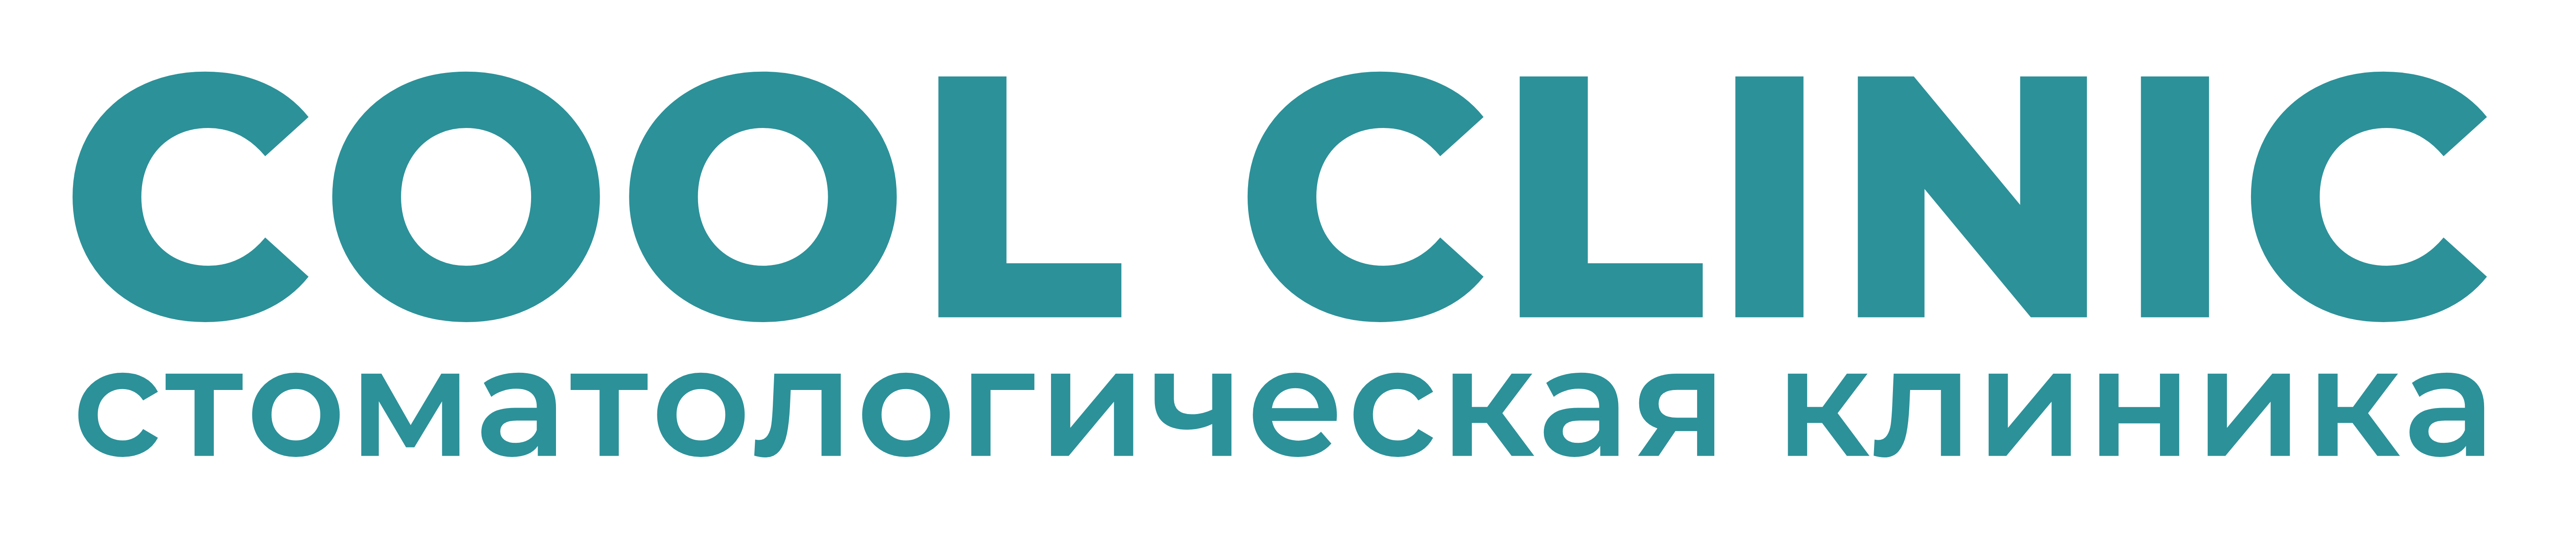 Кул Клиник - стоматология в Краснодаре